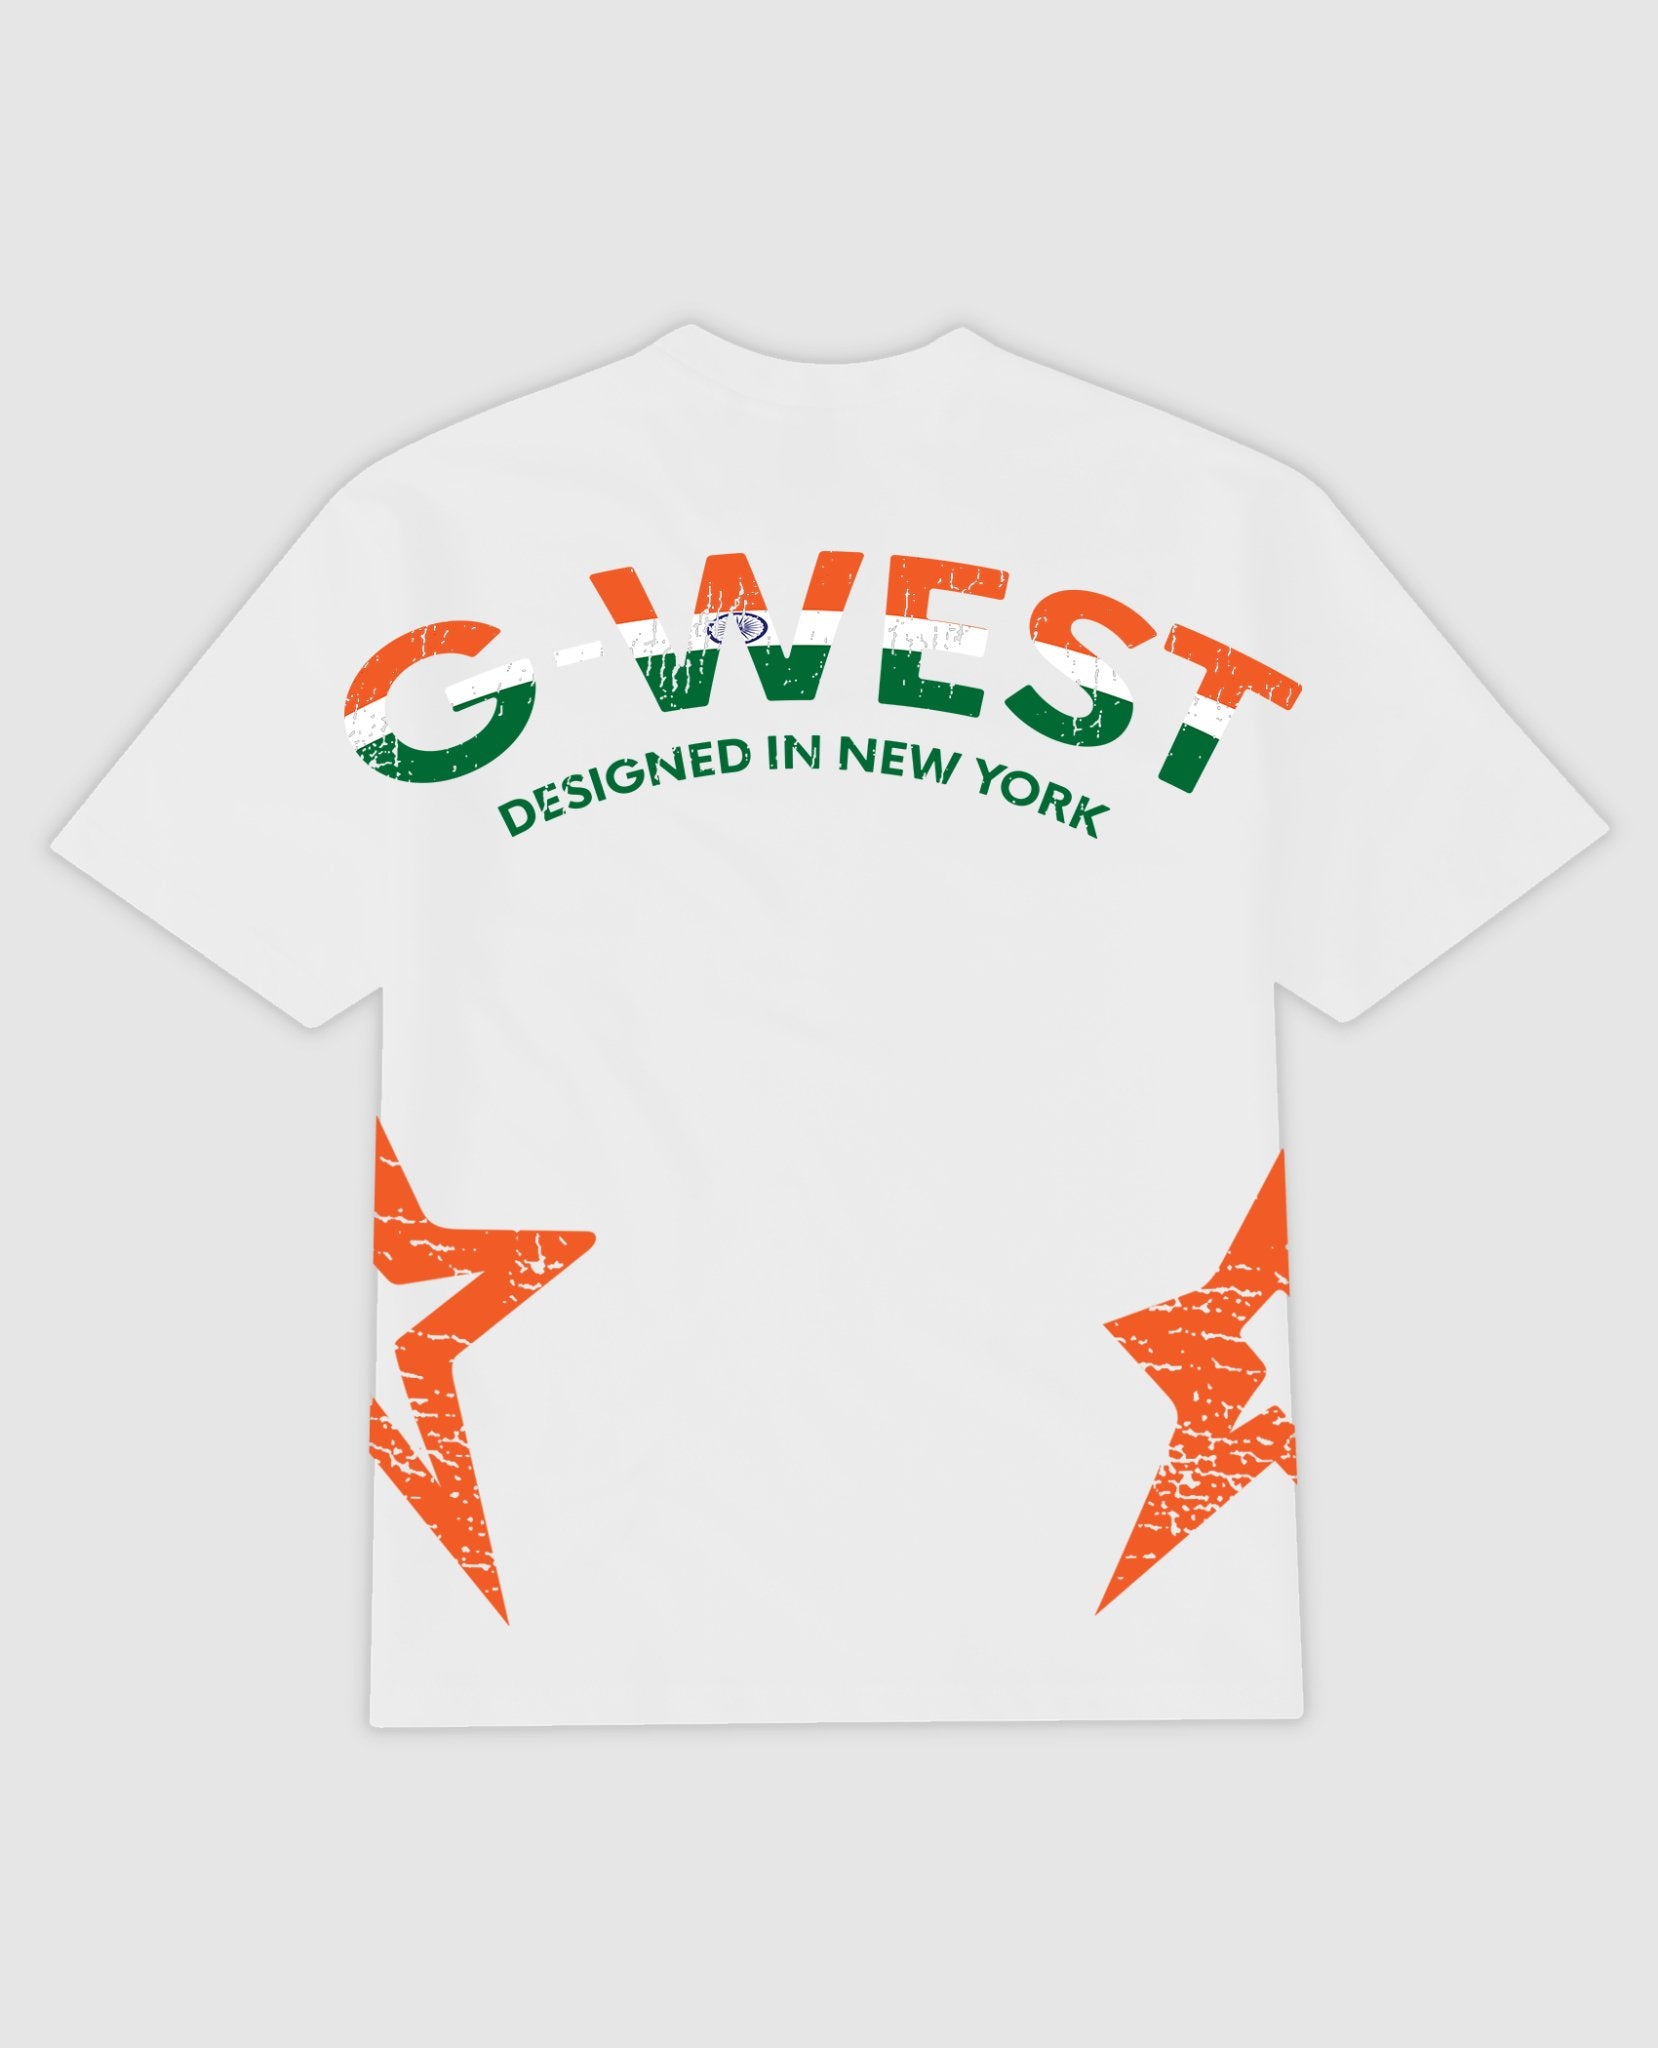 G West Cricket India Arch Logo T-Shirt : GWDTFL2401 - 2 COLORS - G West